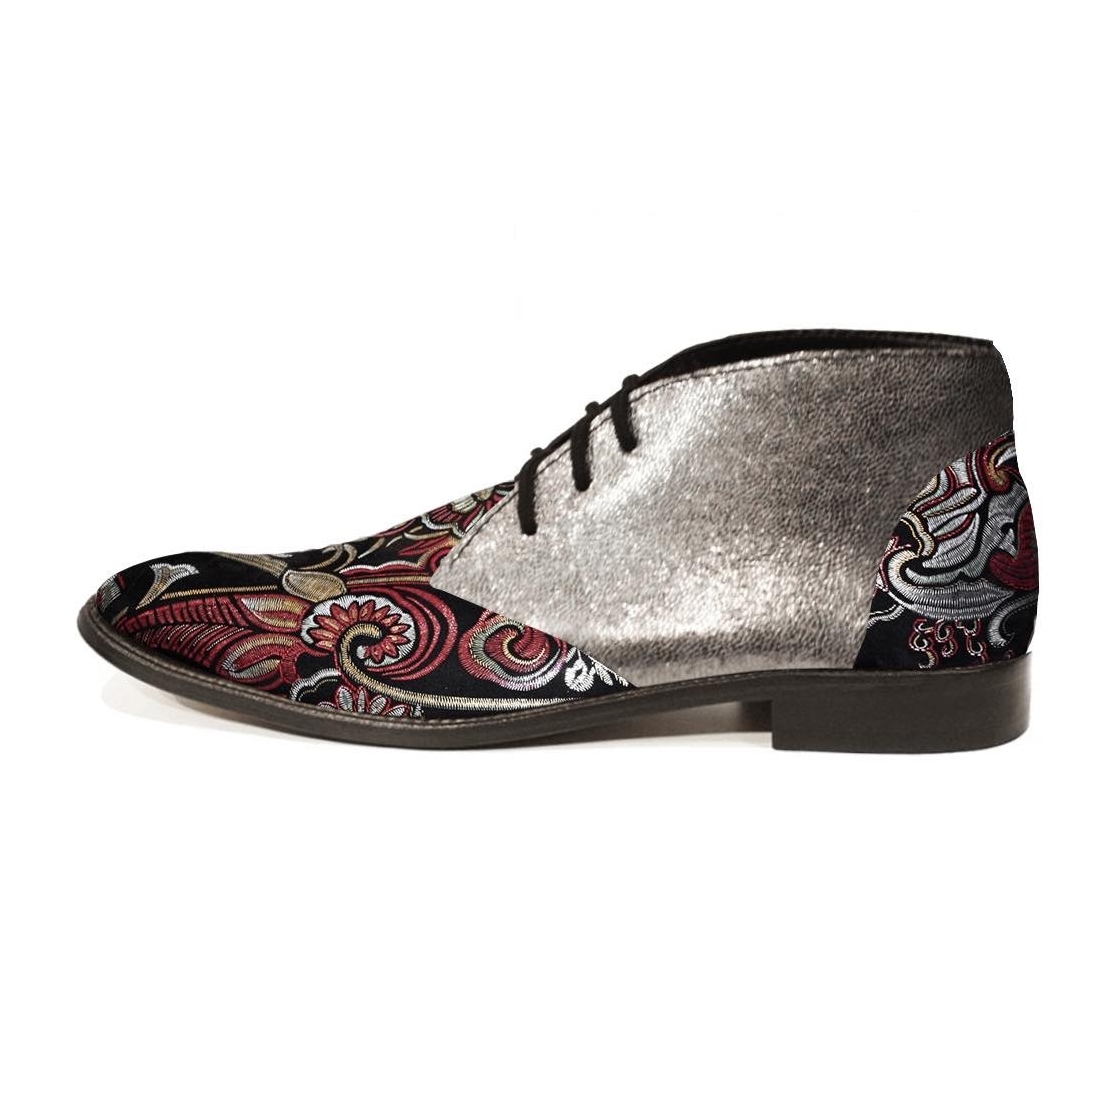 Modello Argentello - чукка мужские - Handmade Colorful Italian Leather Shoes